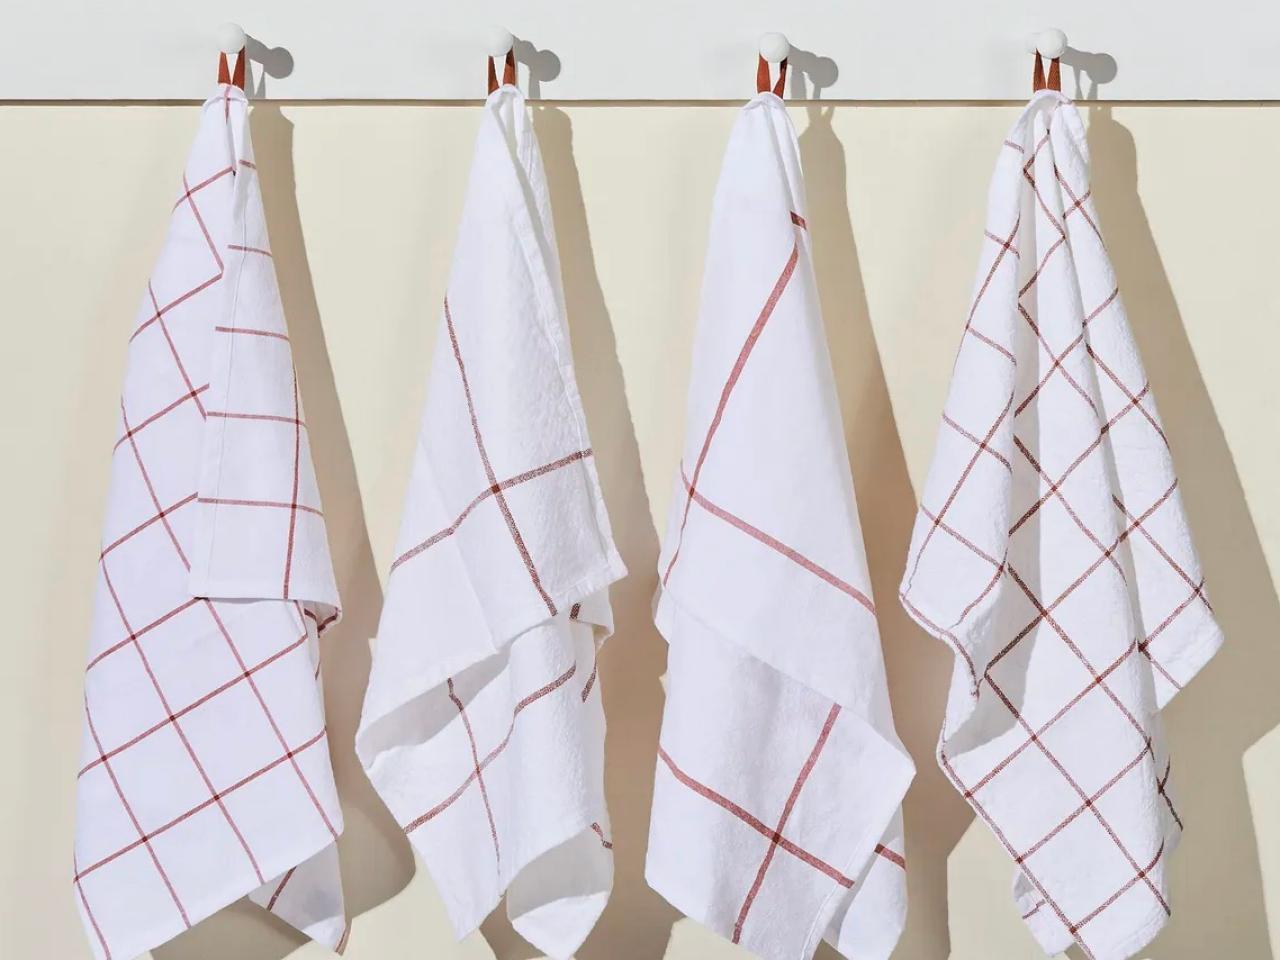 All-Clad Dual Striped Tea Towel & Reviews